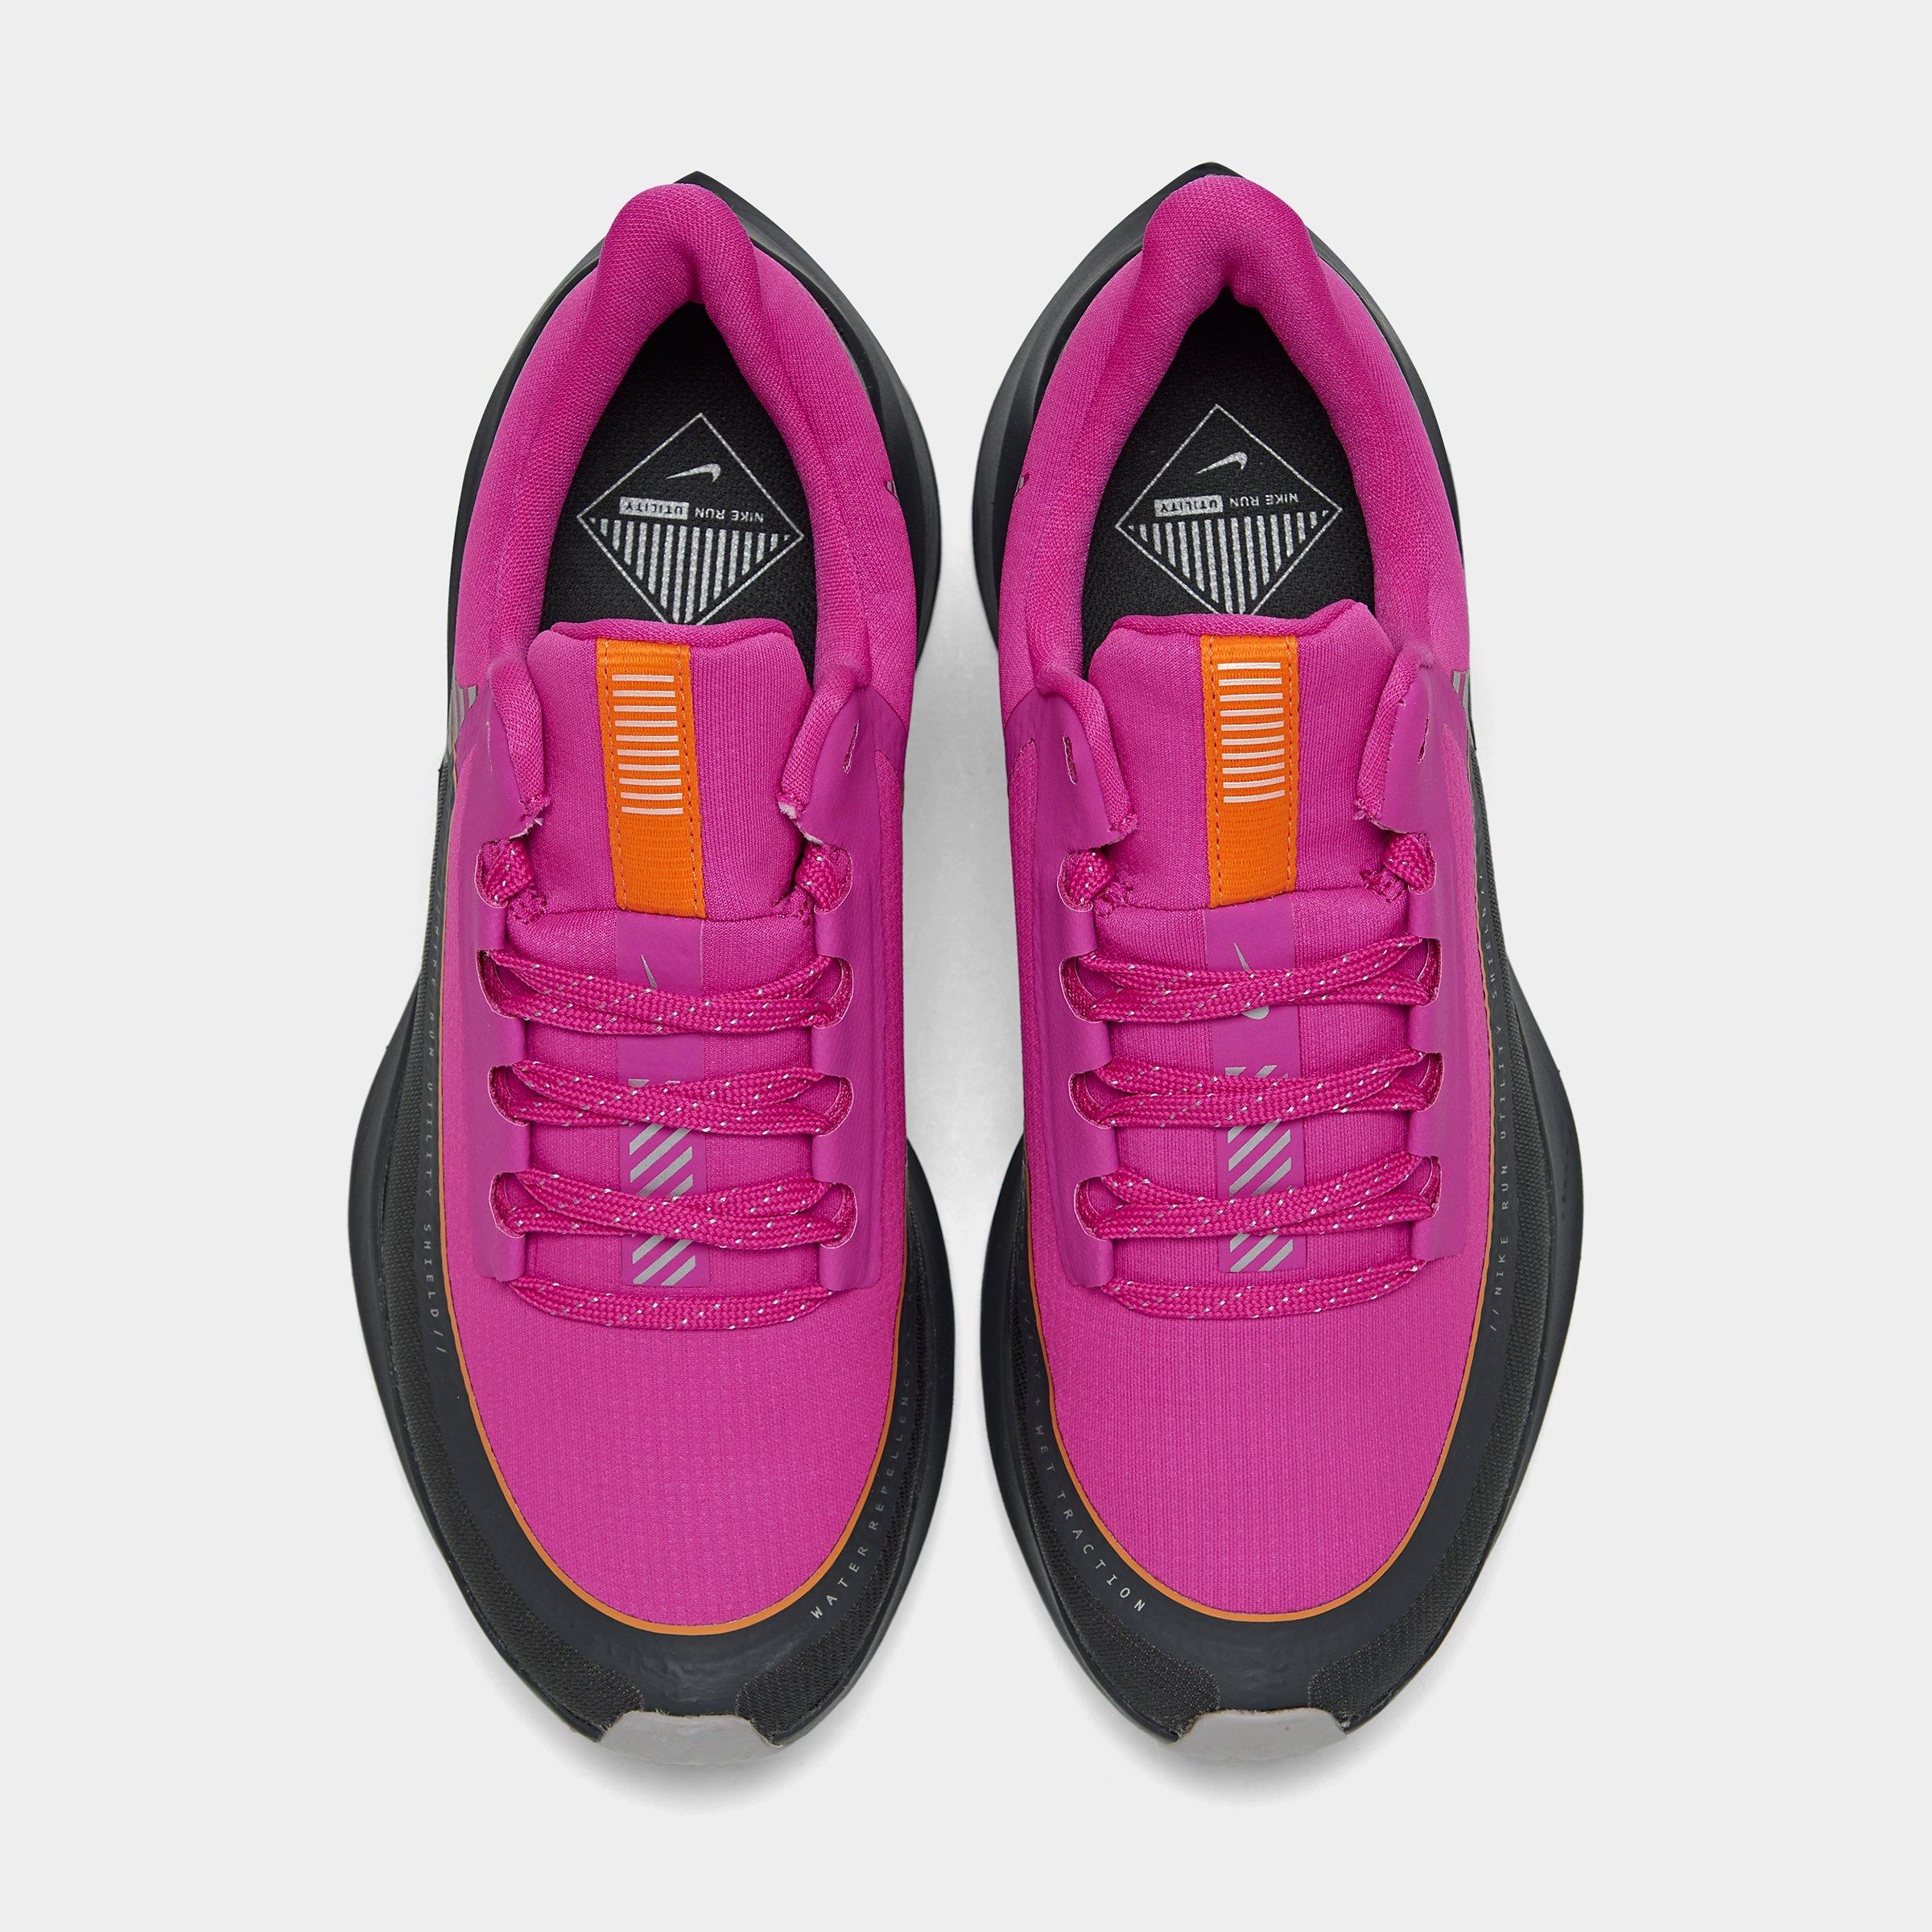 nike zoom winflo women's running shoes